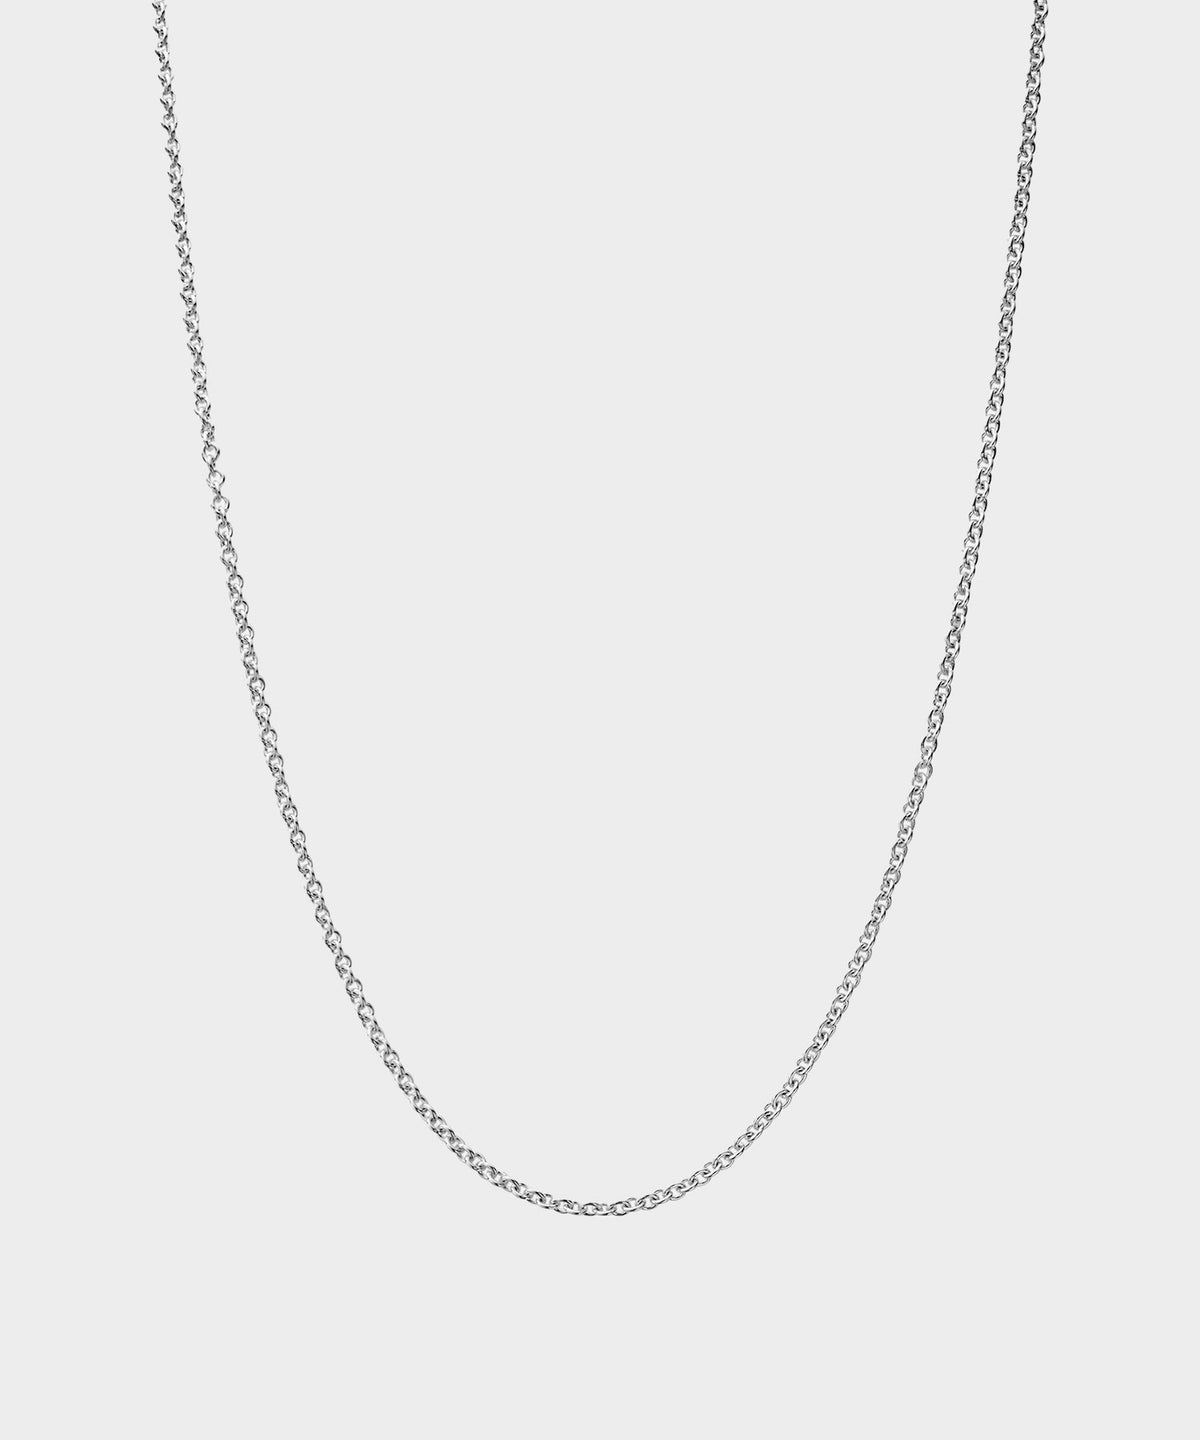 Miansai Amit Chain Necklace in Sterling Silver